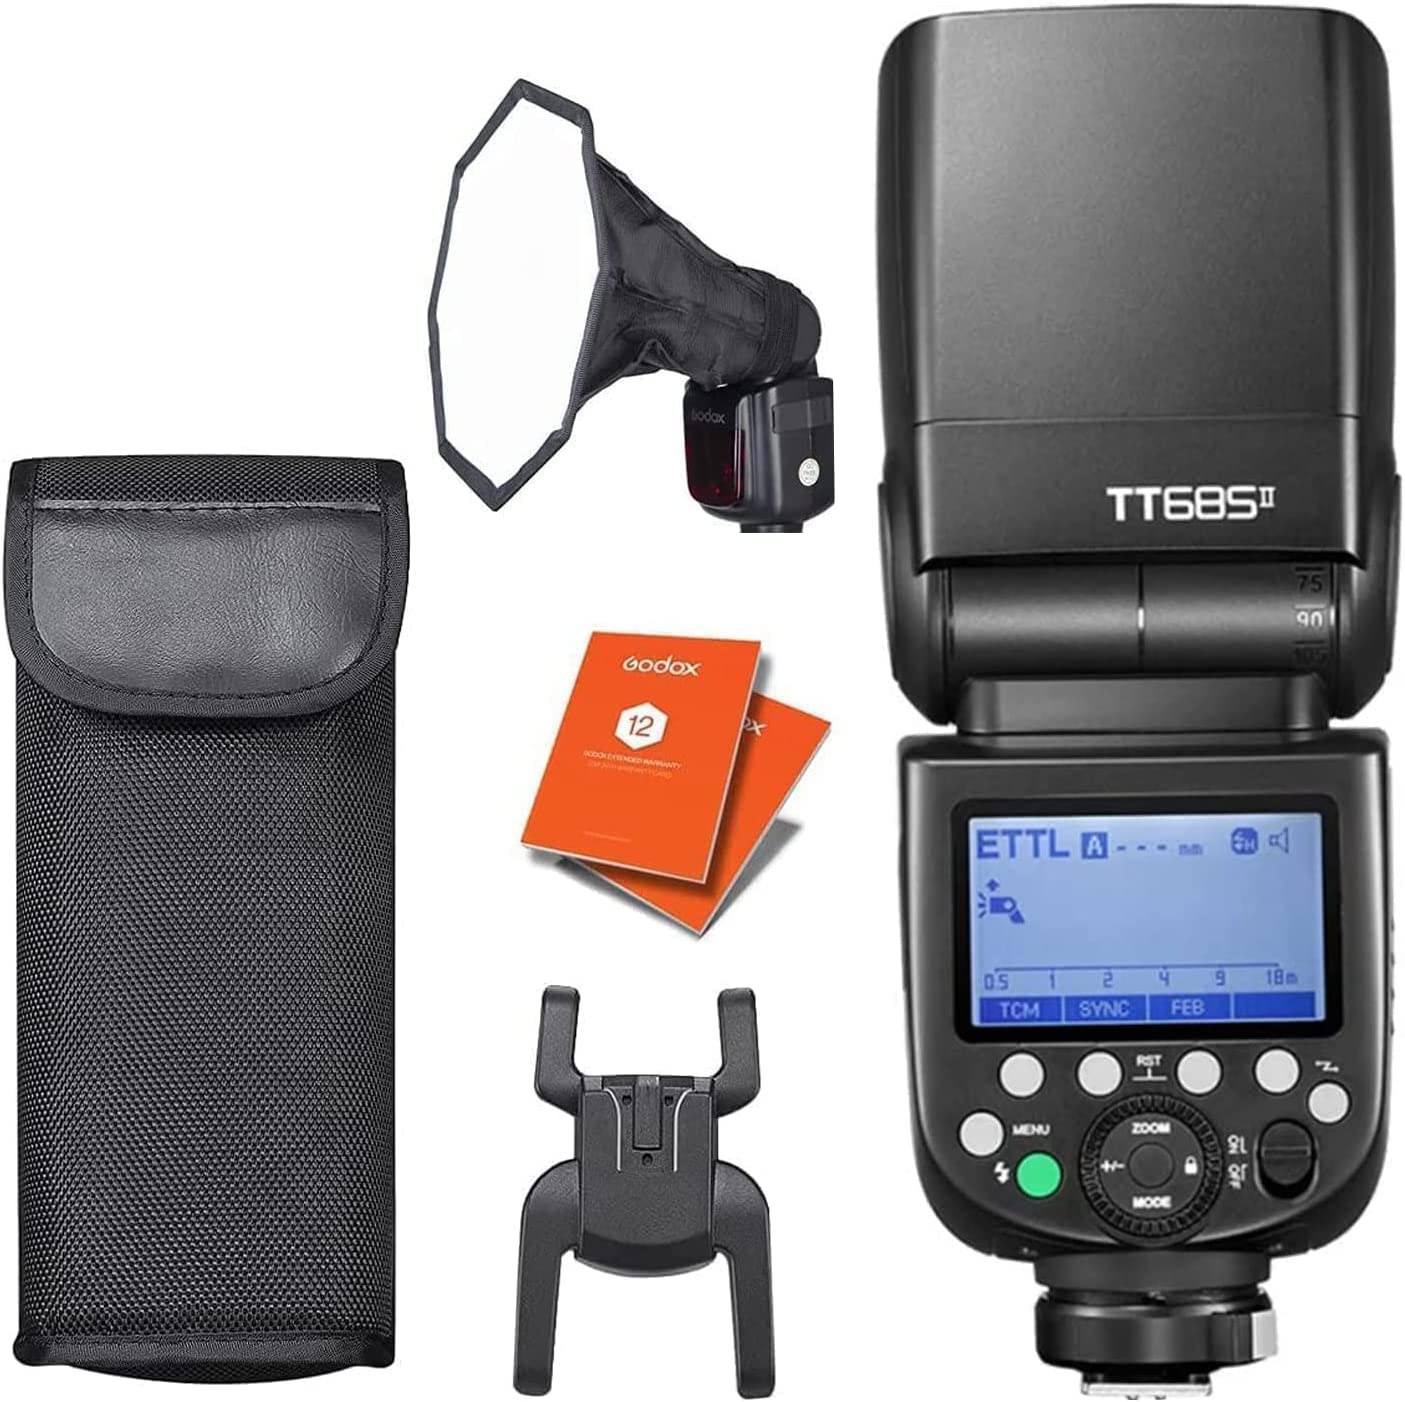 Product Image of Godox TT685II TTL Camera Flash 1/8000s HSS Flash Speedlight